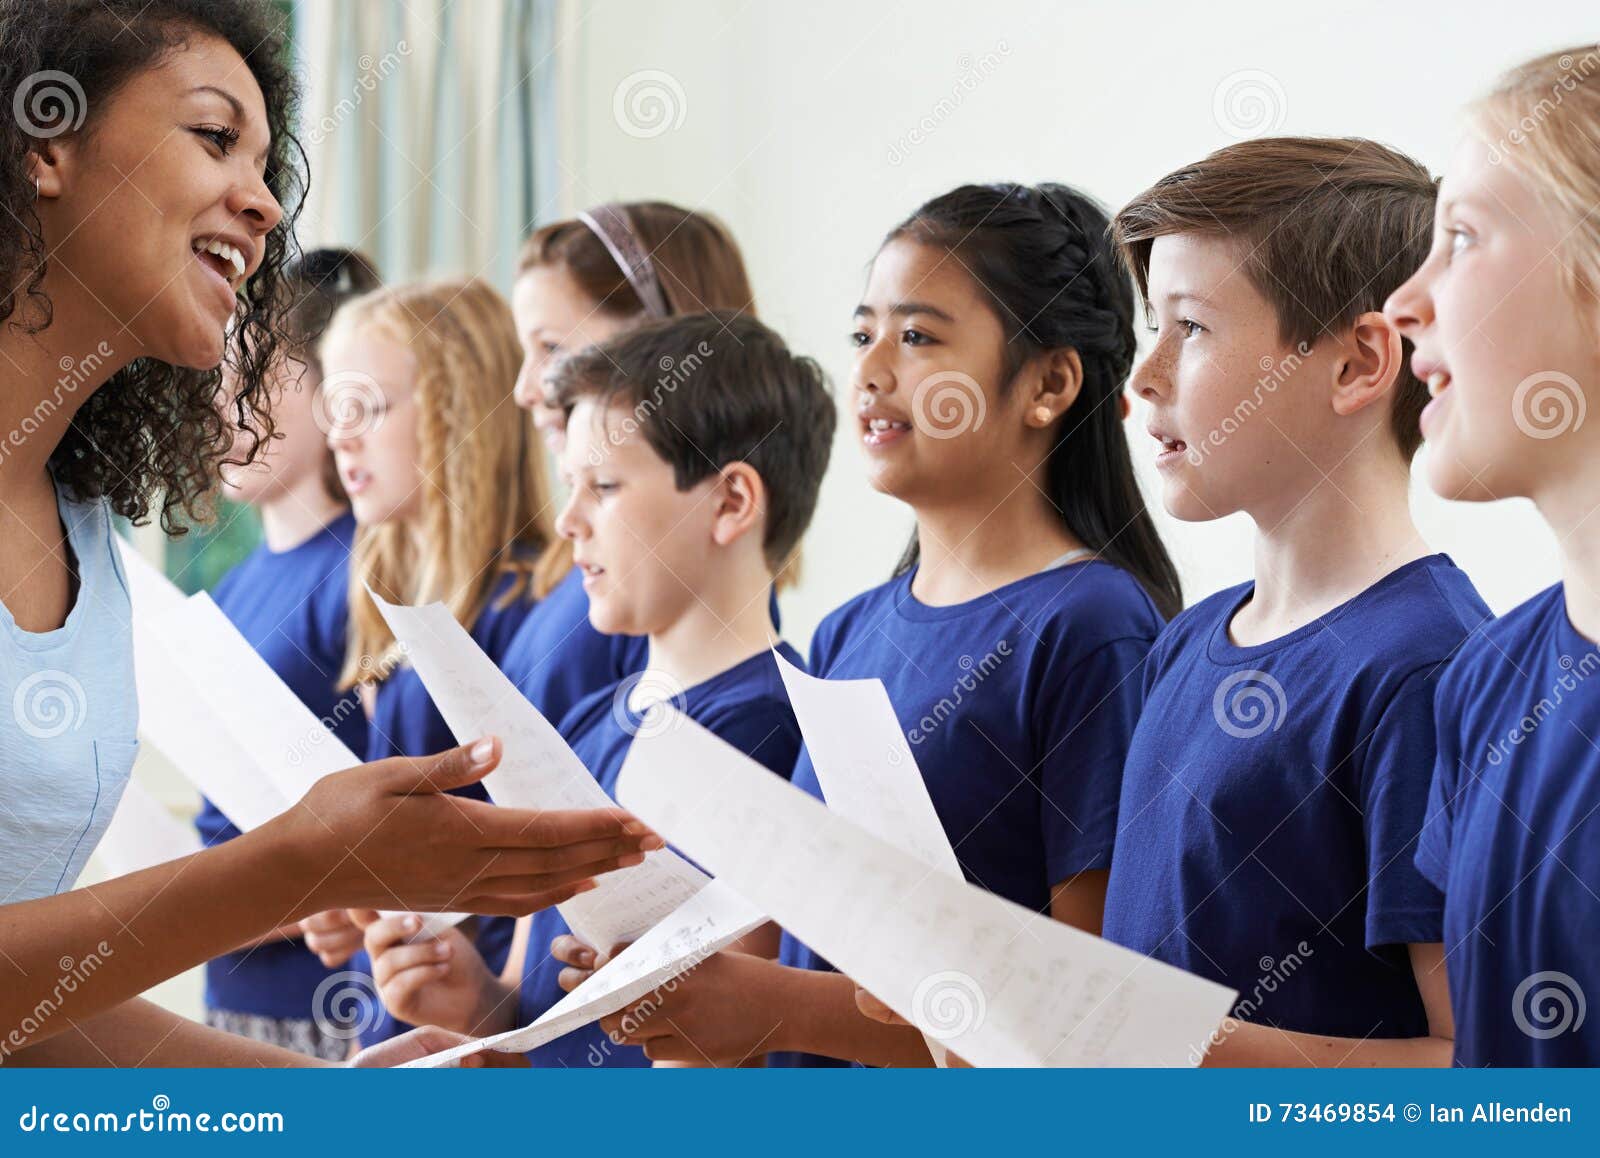 group of school children with teacher singing in choir